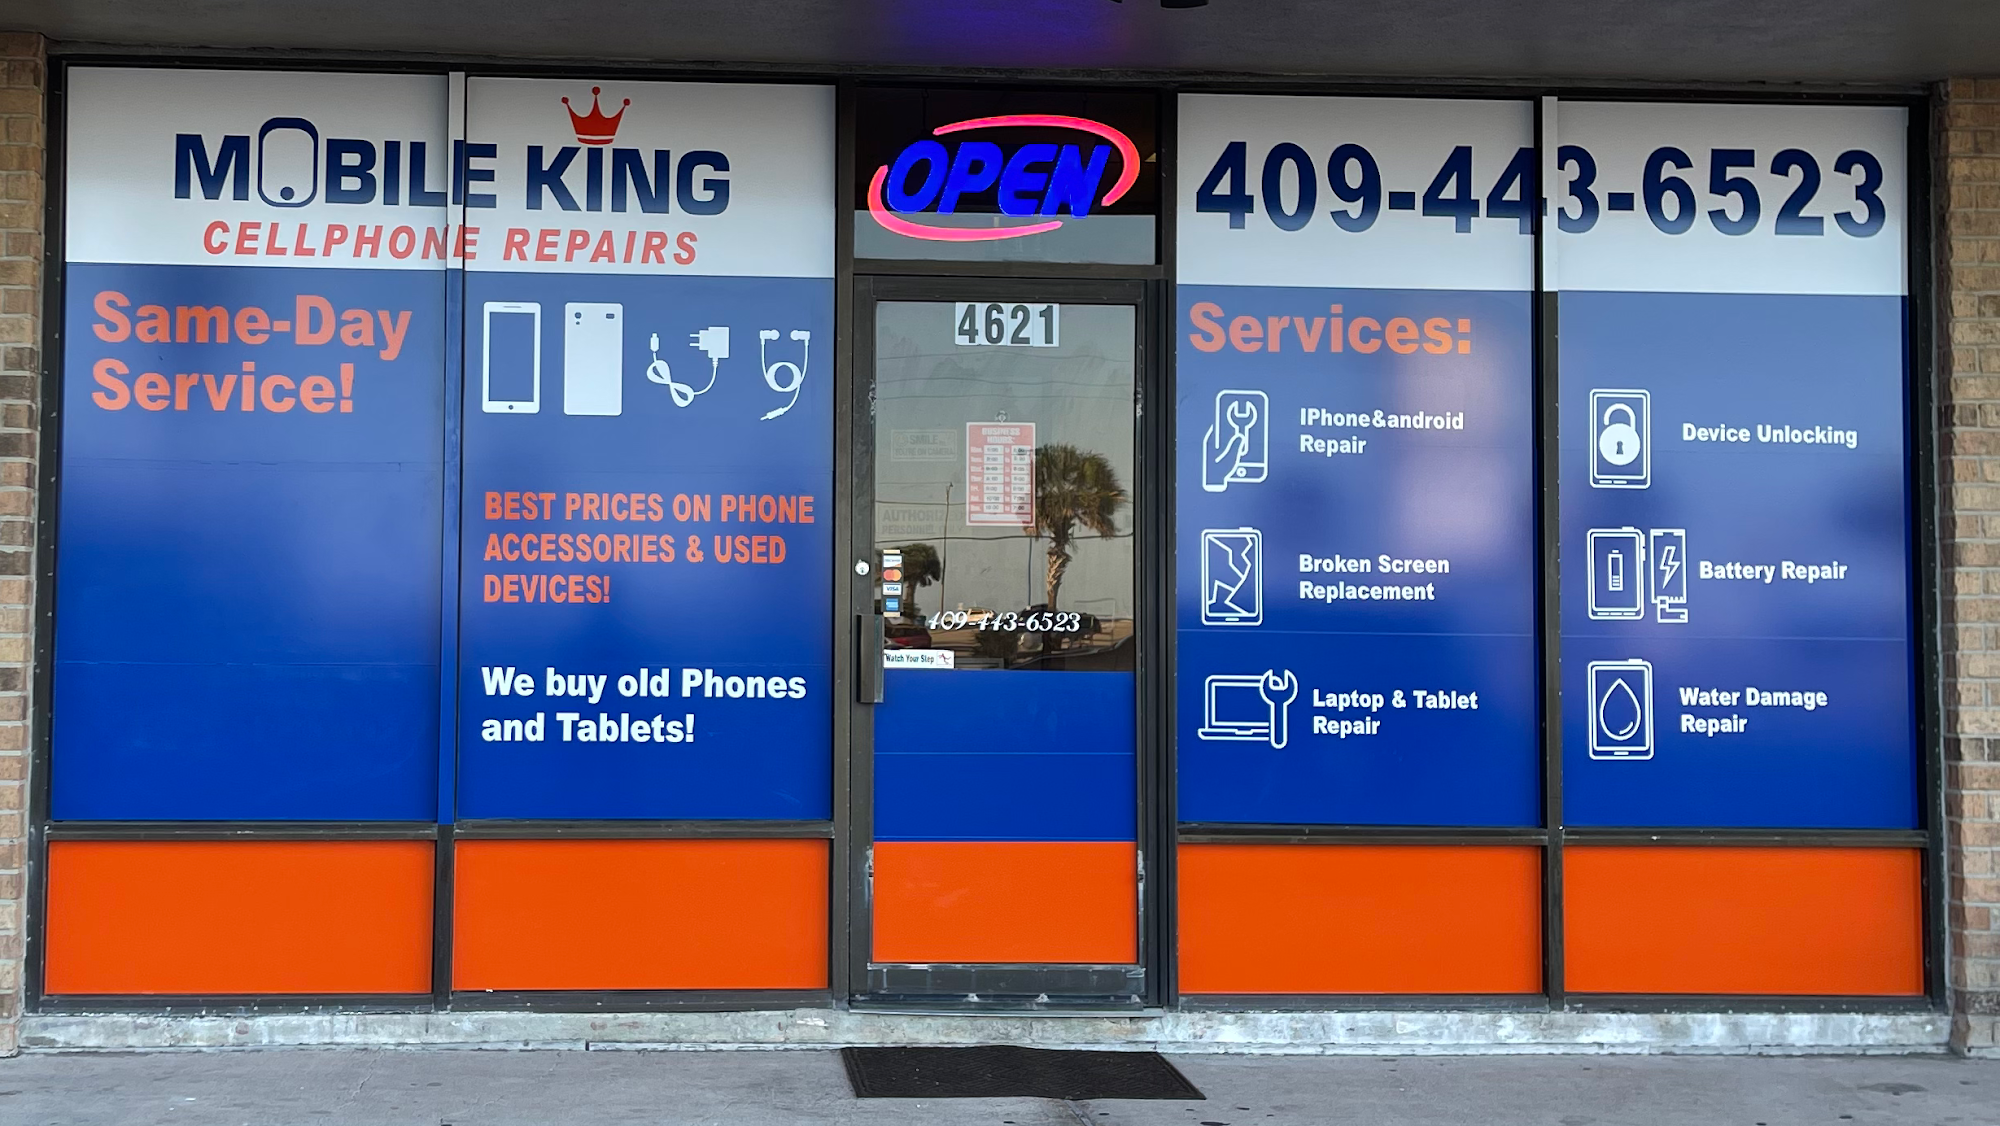 Mobile King Cellphone Repairs